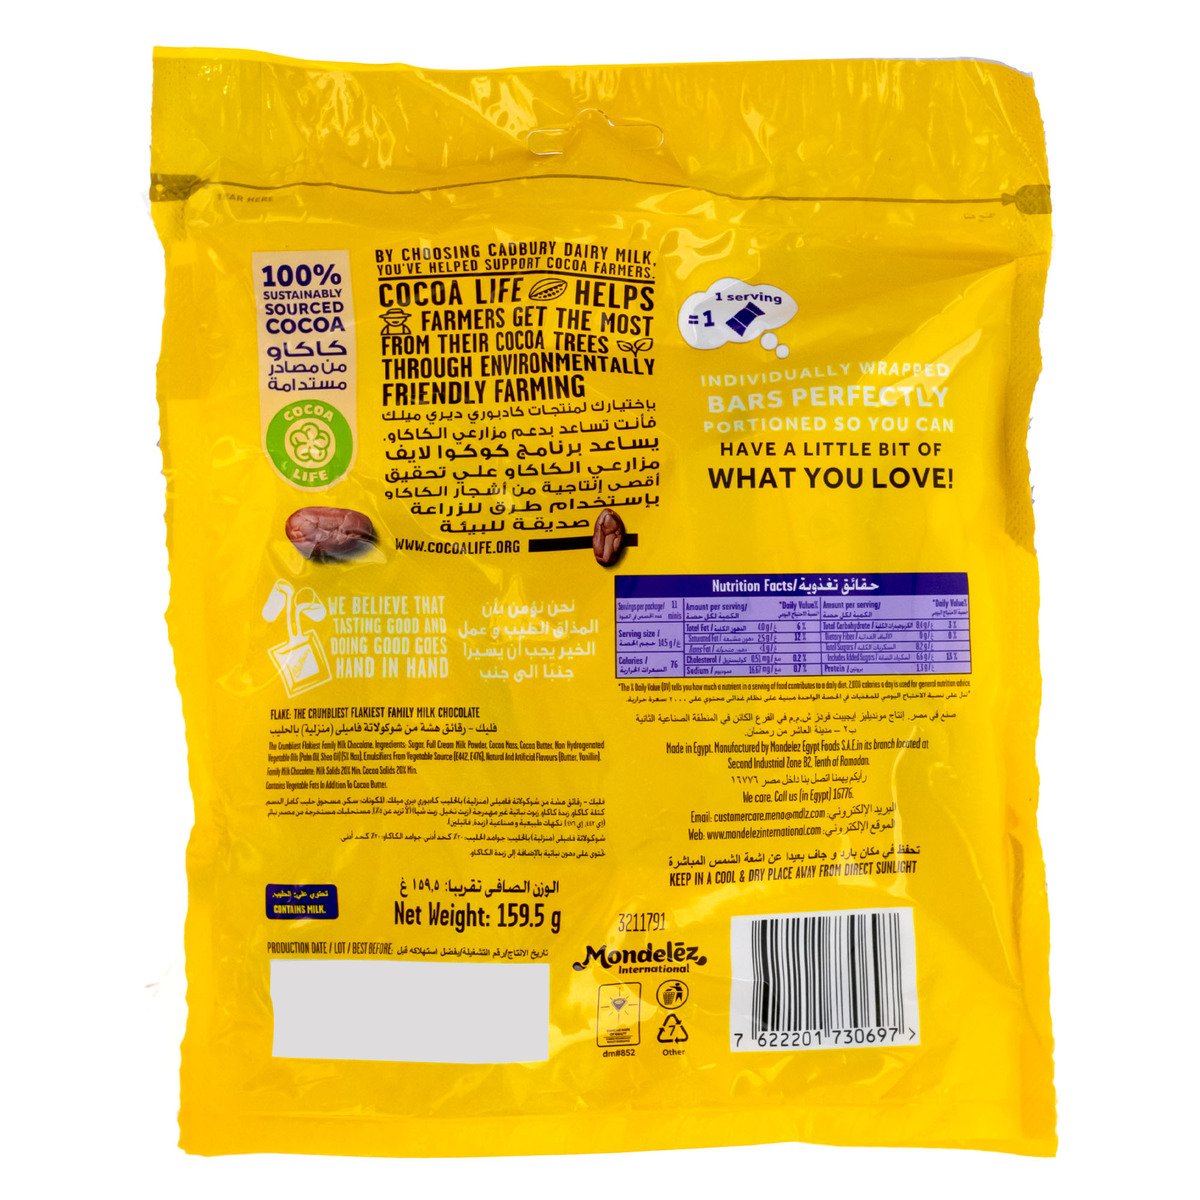 Cadbury Flake Minis Chocolate Bag, 159.5 g